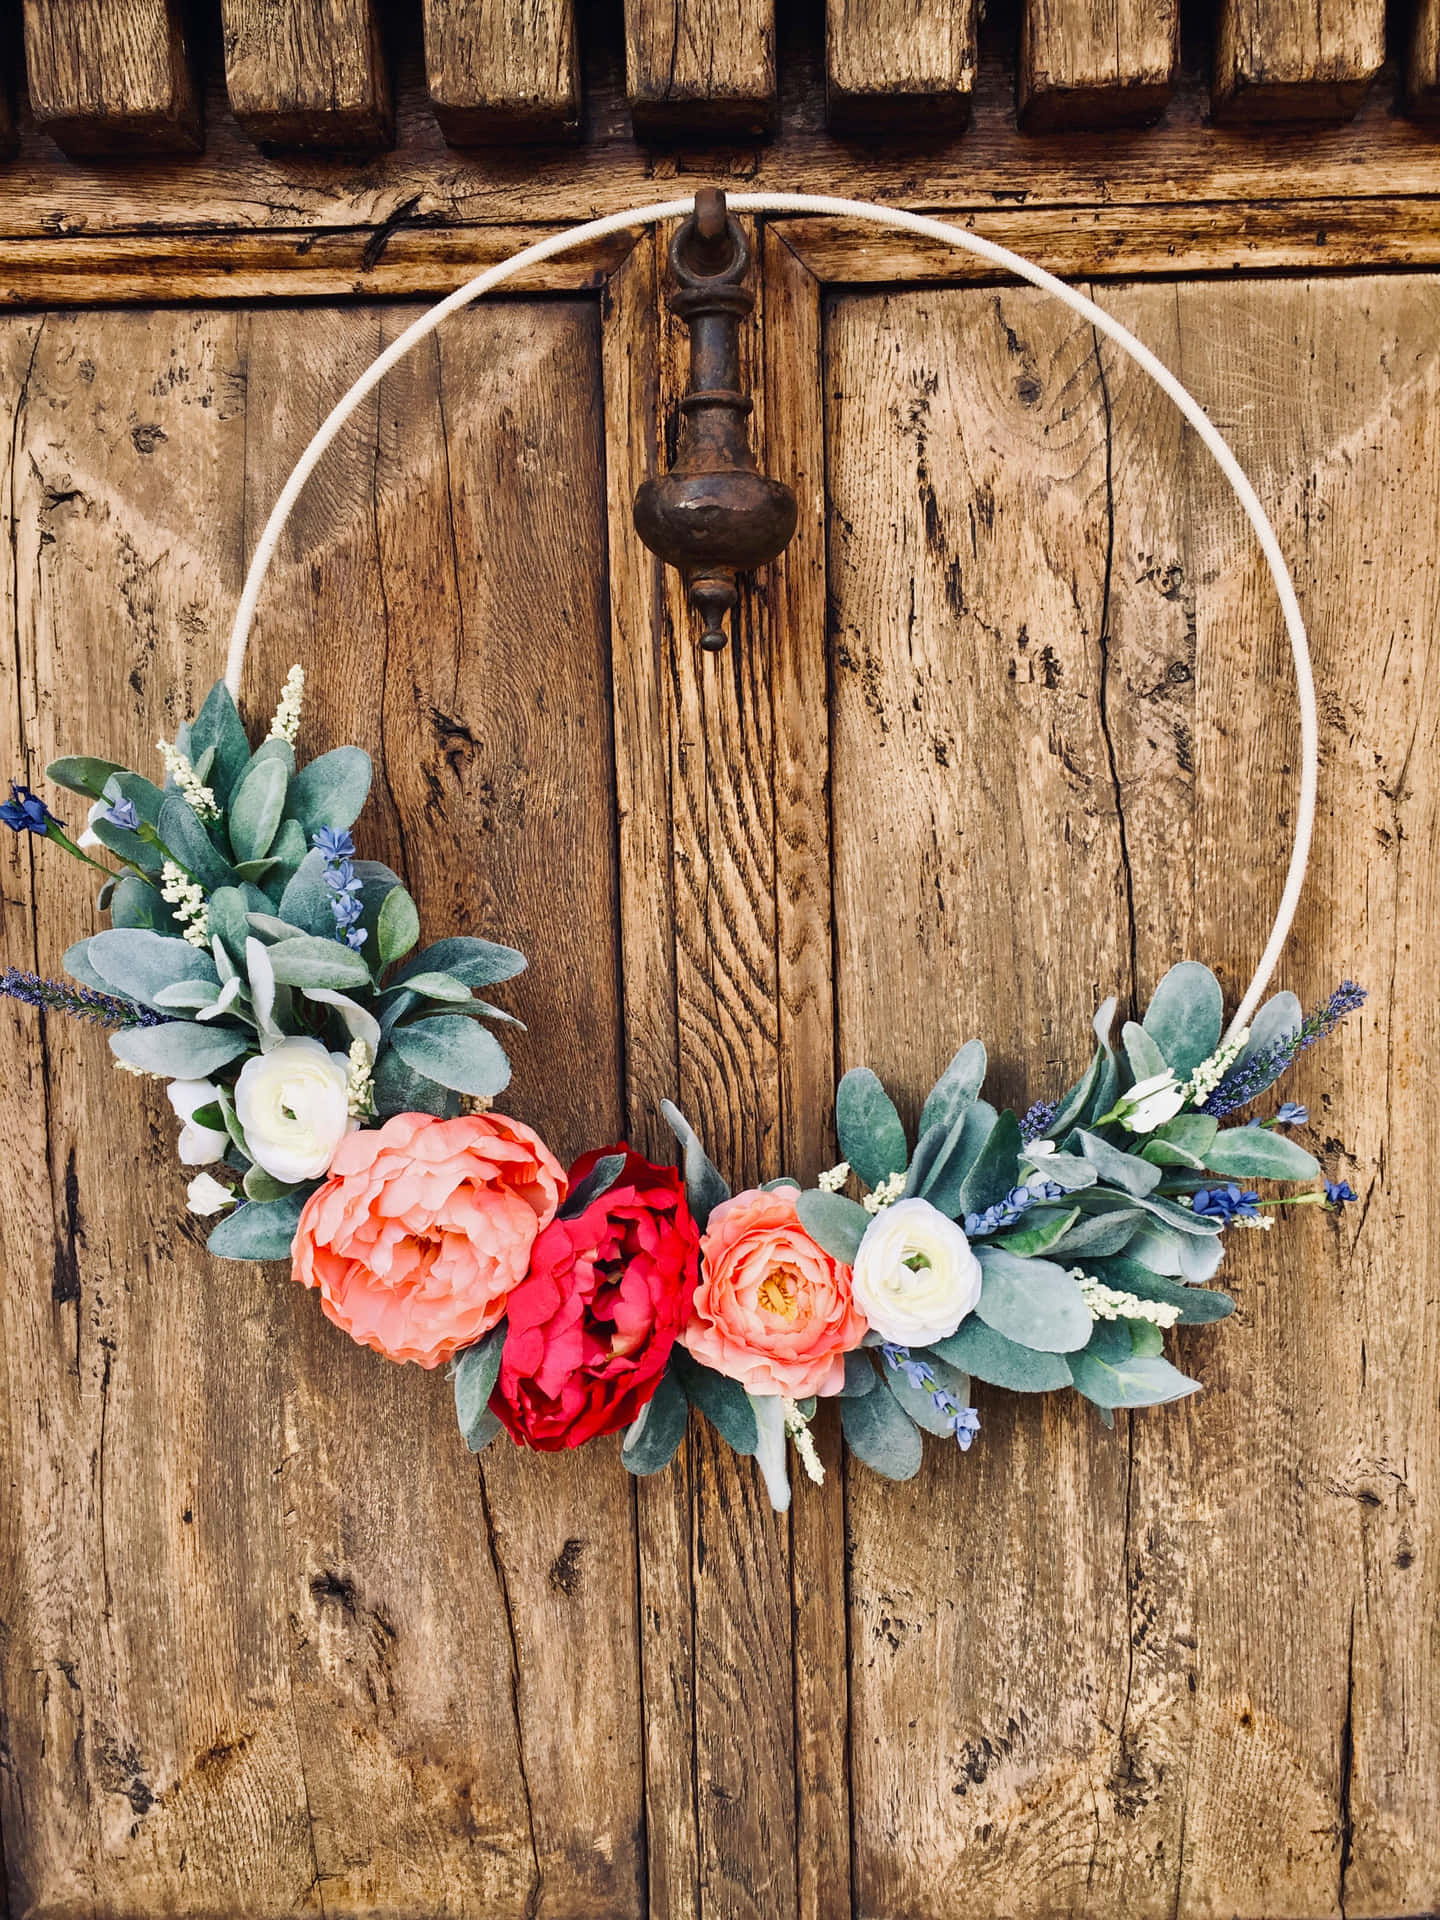 Caption: Vibrant Spring Wreath on a Rustic Door Wallpaper